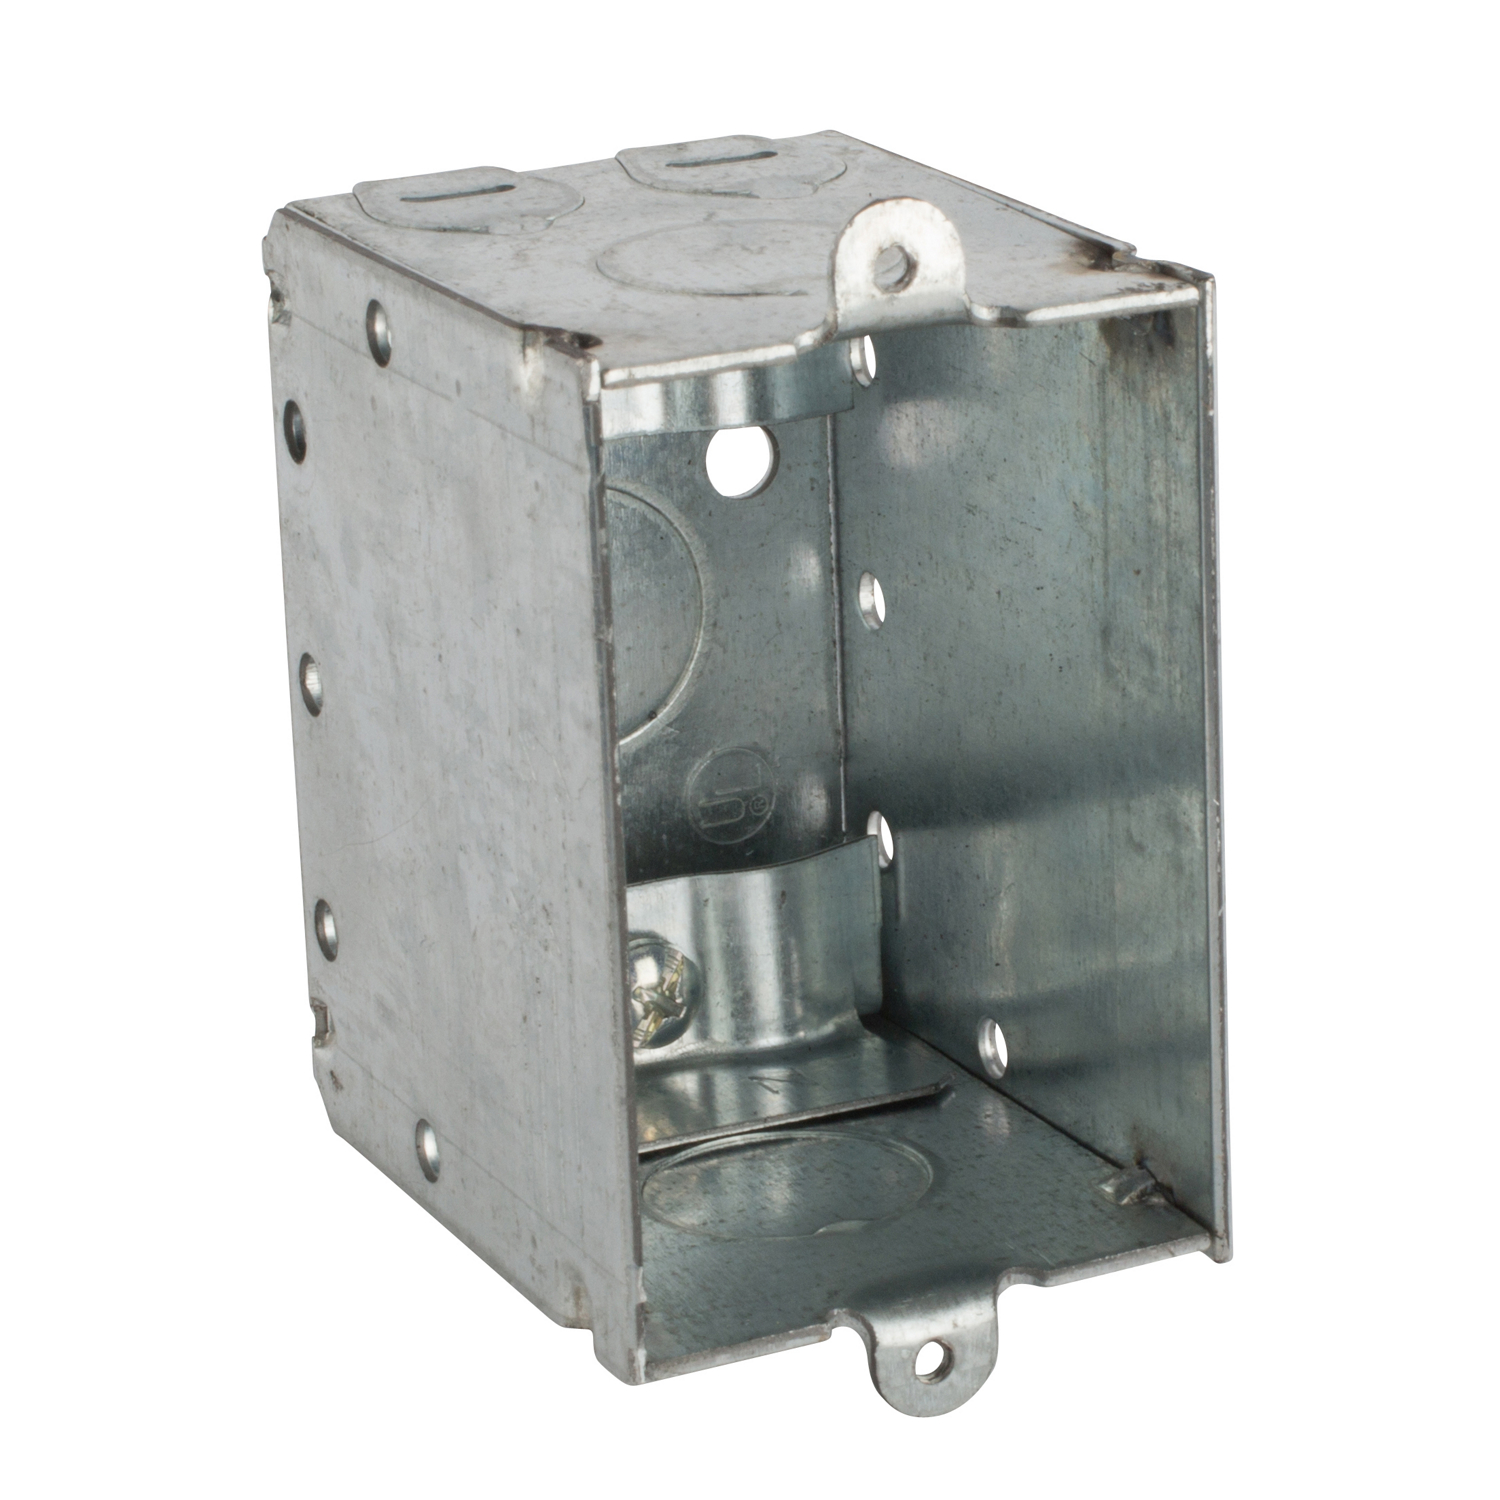 A254-25 Metallic Switch Box Steel City;ABB - Installation Products